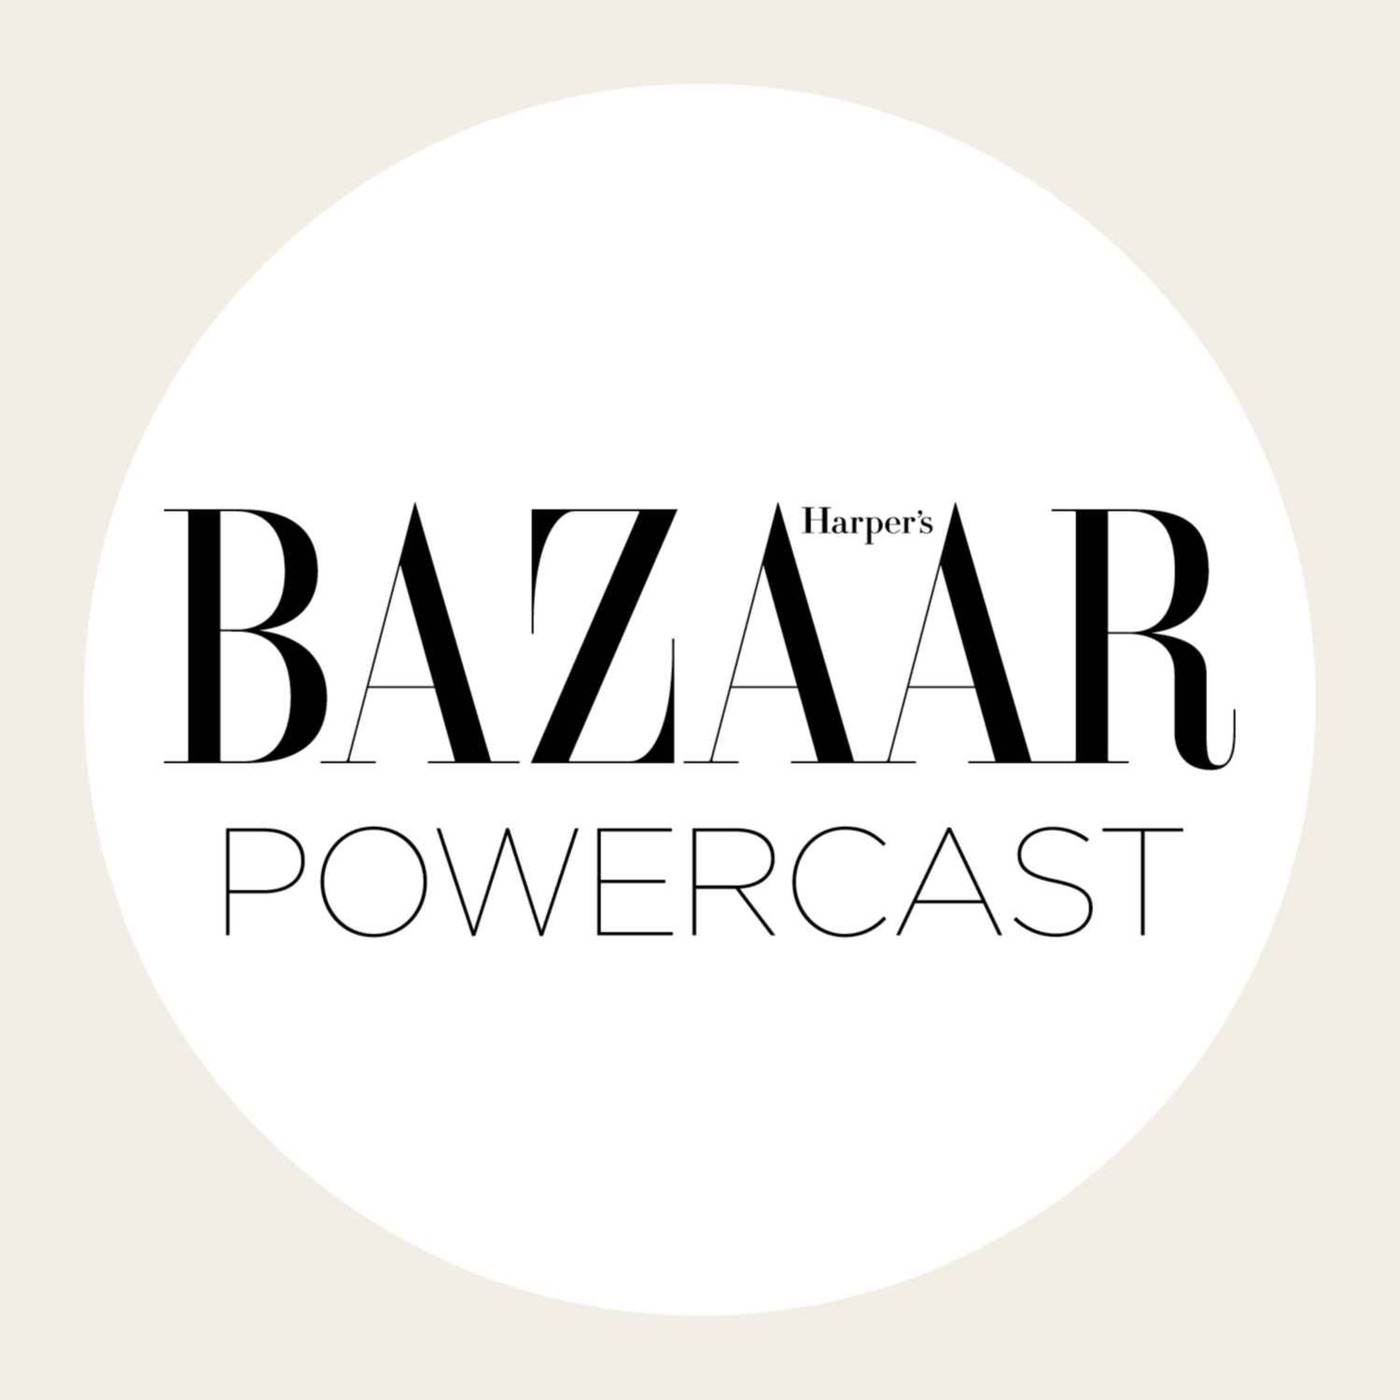 Harper's Bazaar Powercast logo